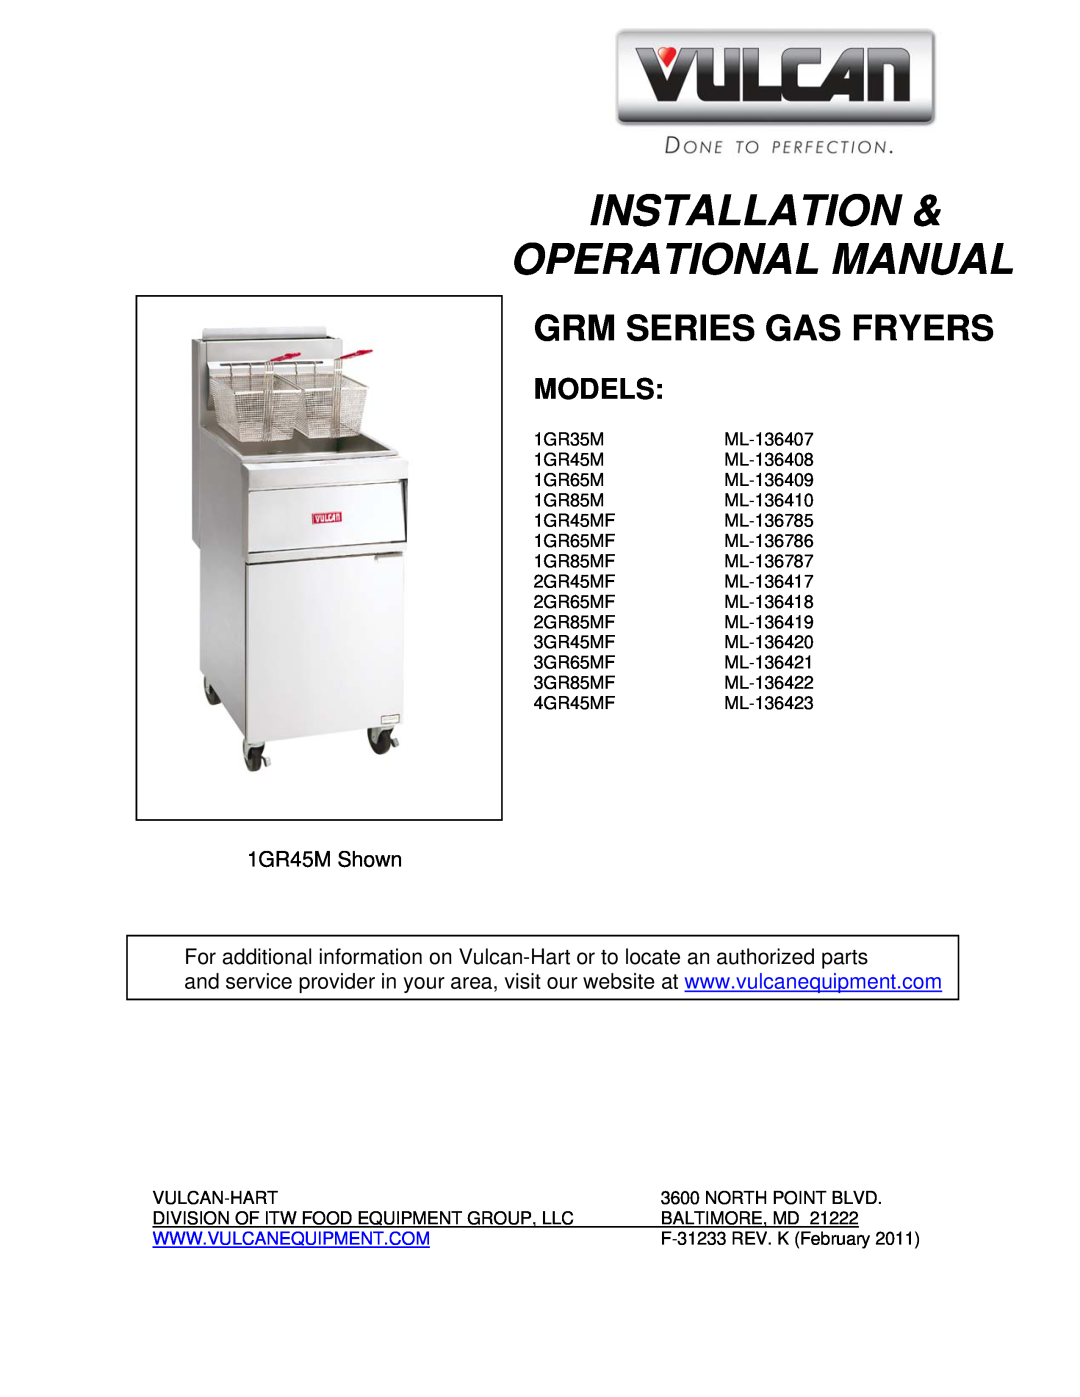 Vulcan-Hart 3GR85MF ML-136422, 4GR45MF ML-136423 manual Models, Installation & Operational Manual, Grm Series Gas Fryers 